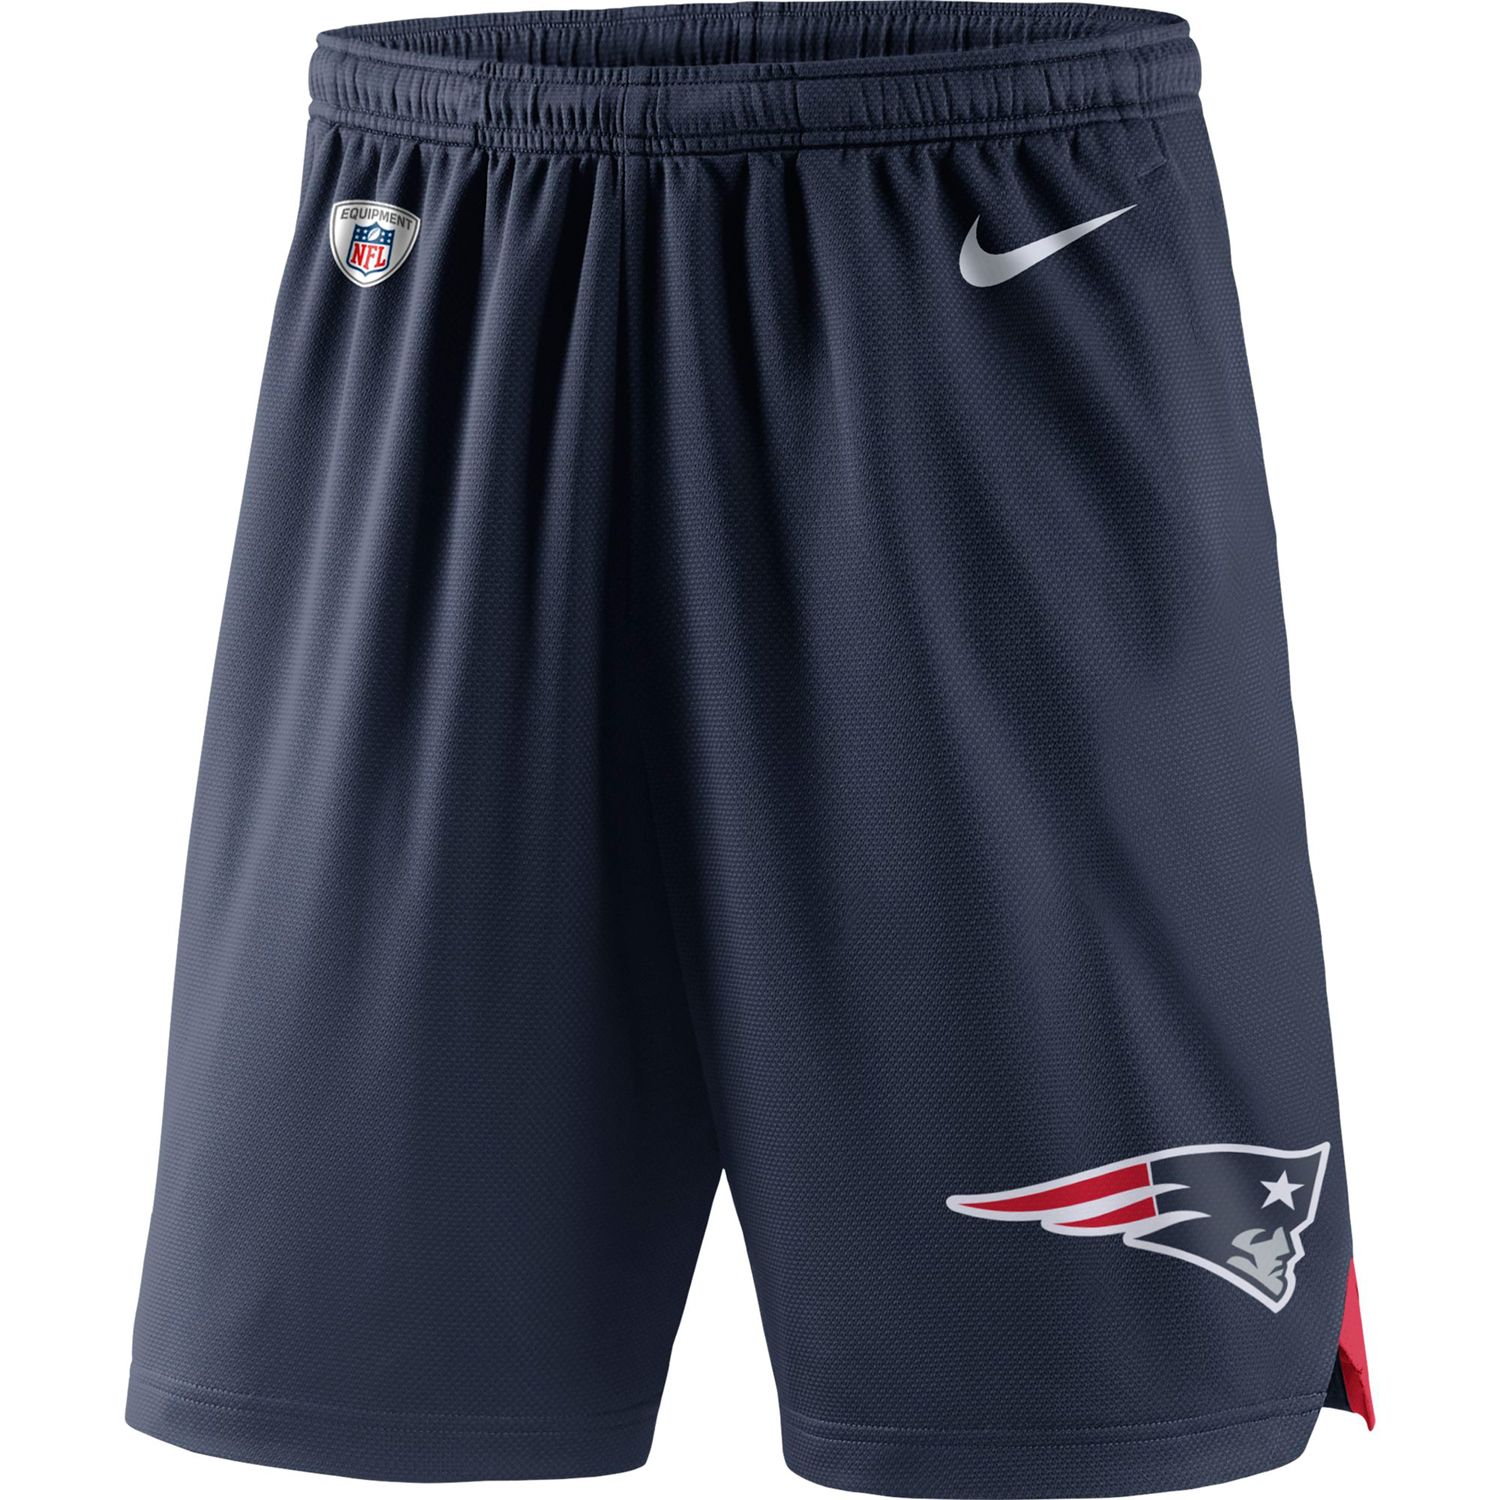 England Patriots Knit Dri-FIT Shorts